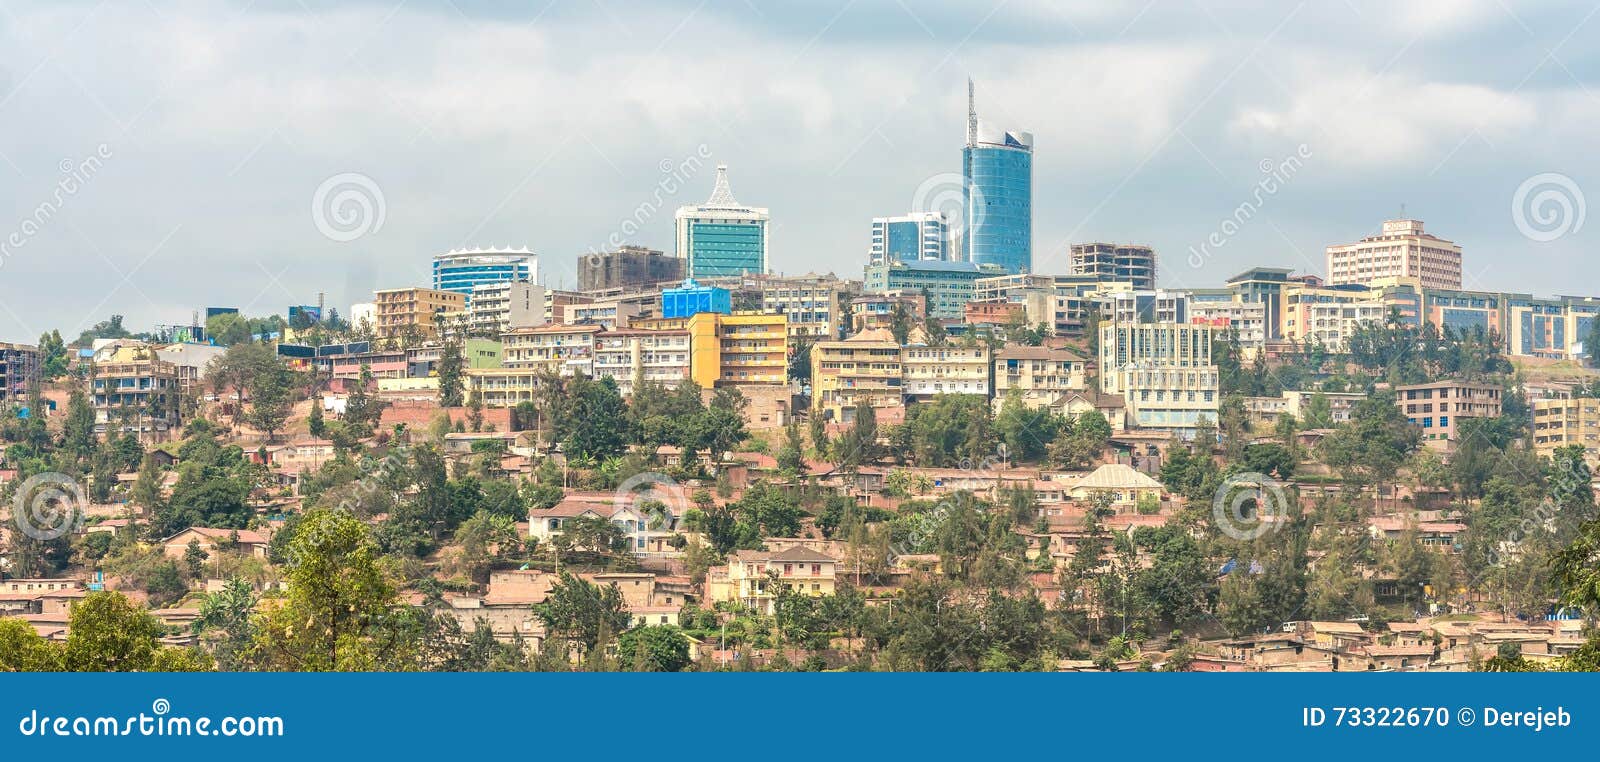 downtown kigali